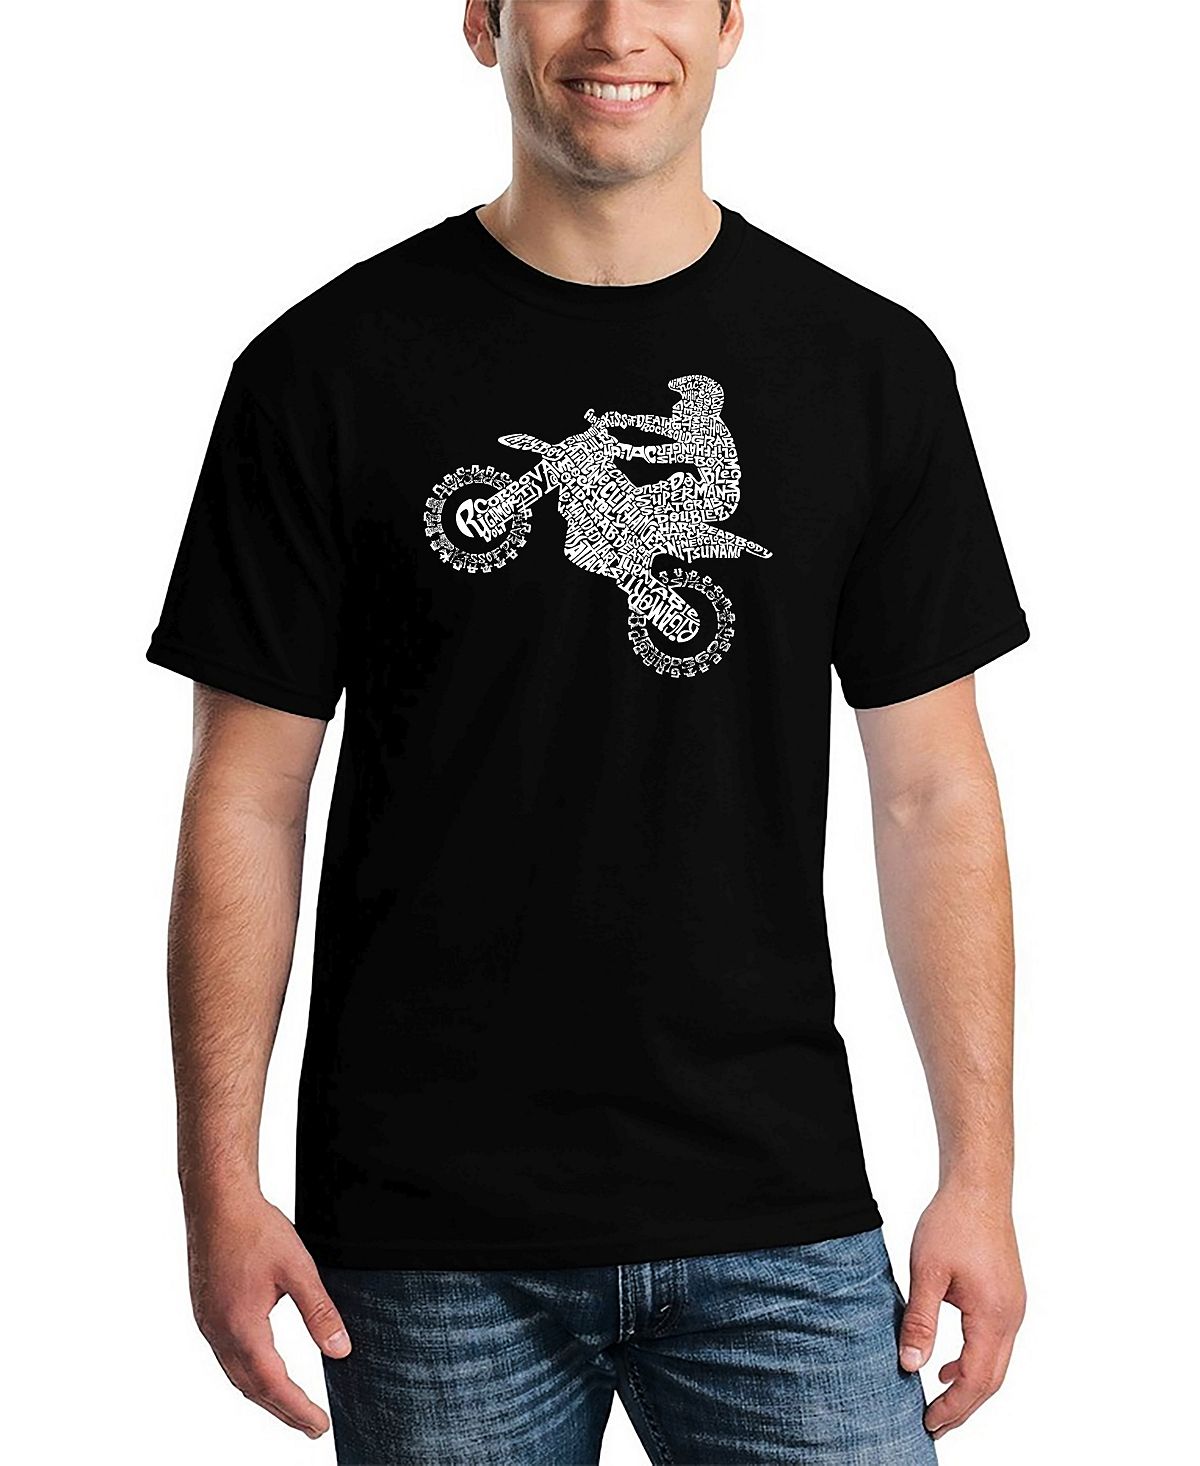 Мужской фристайл-мотокросс - футболка fmx word art LA Pop Art, черный